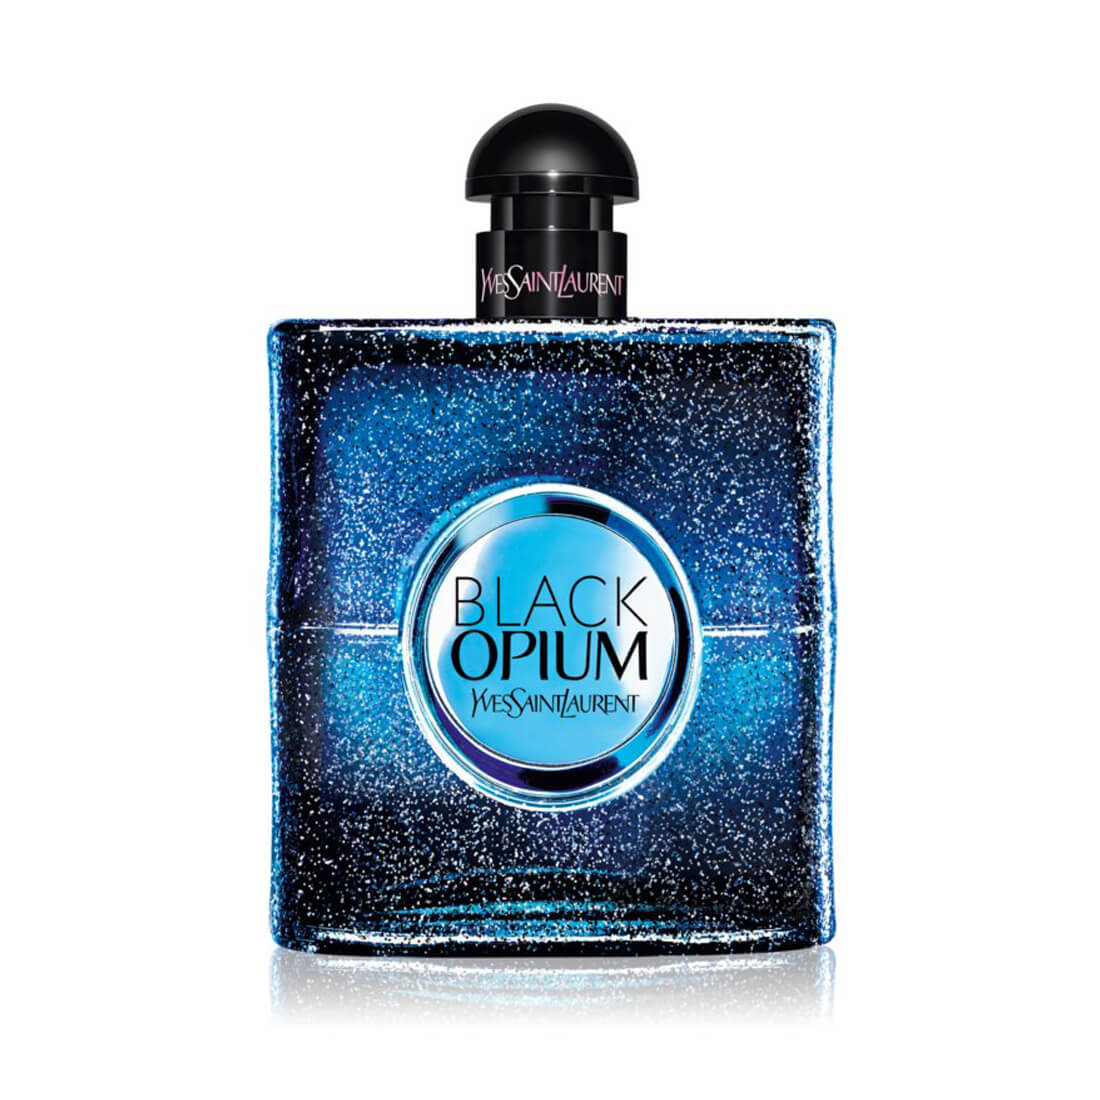 Yves Saint Laurent Black Opium Intense Eau De Perfume For Women 90ml